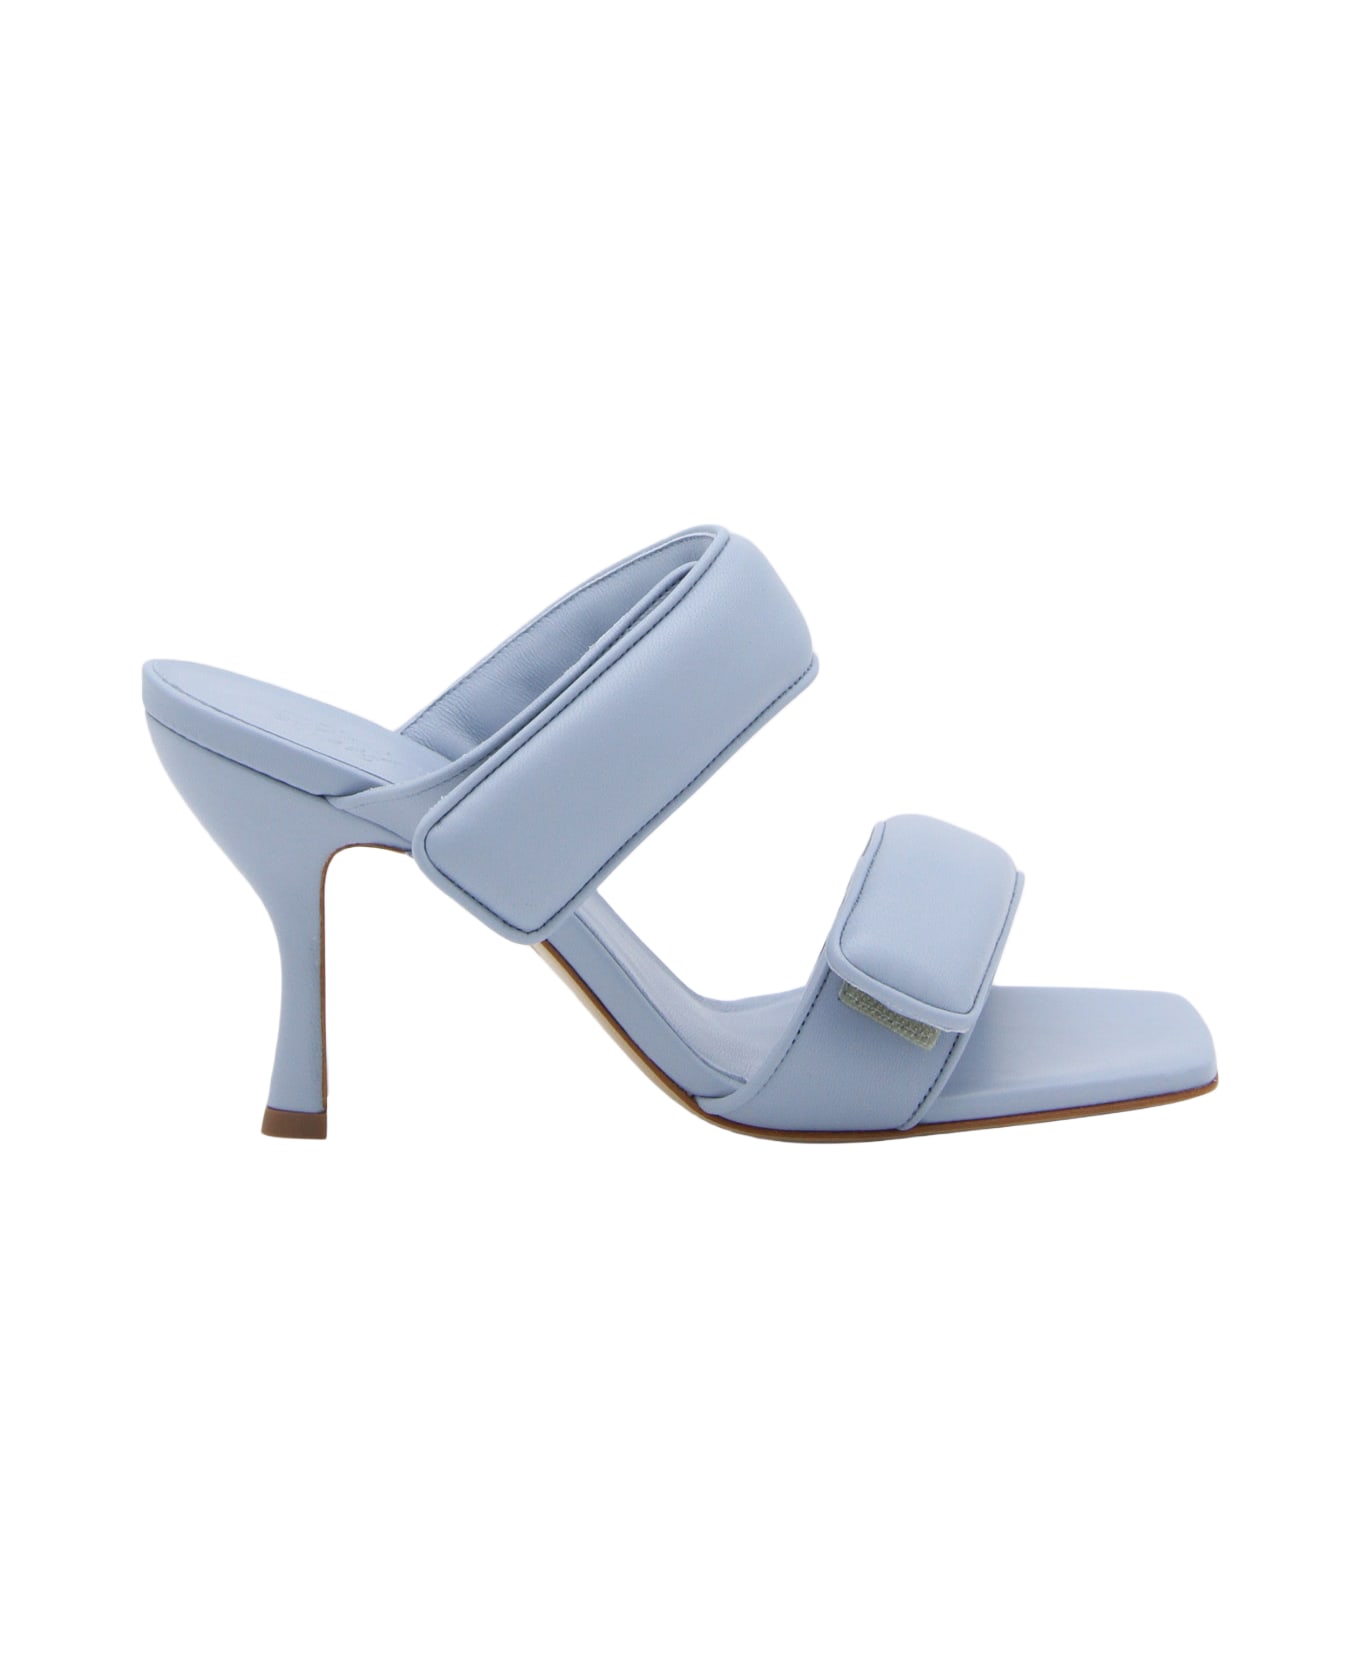 Gia X Pernille Teisbaek Ice Blue Leather Perni 03 Sandals - ICE BLUE